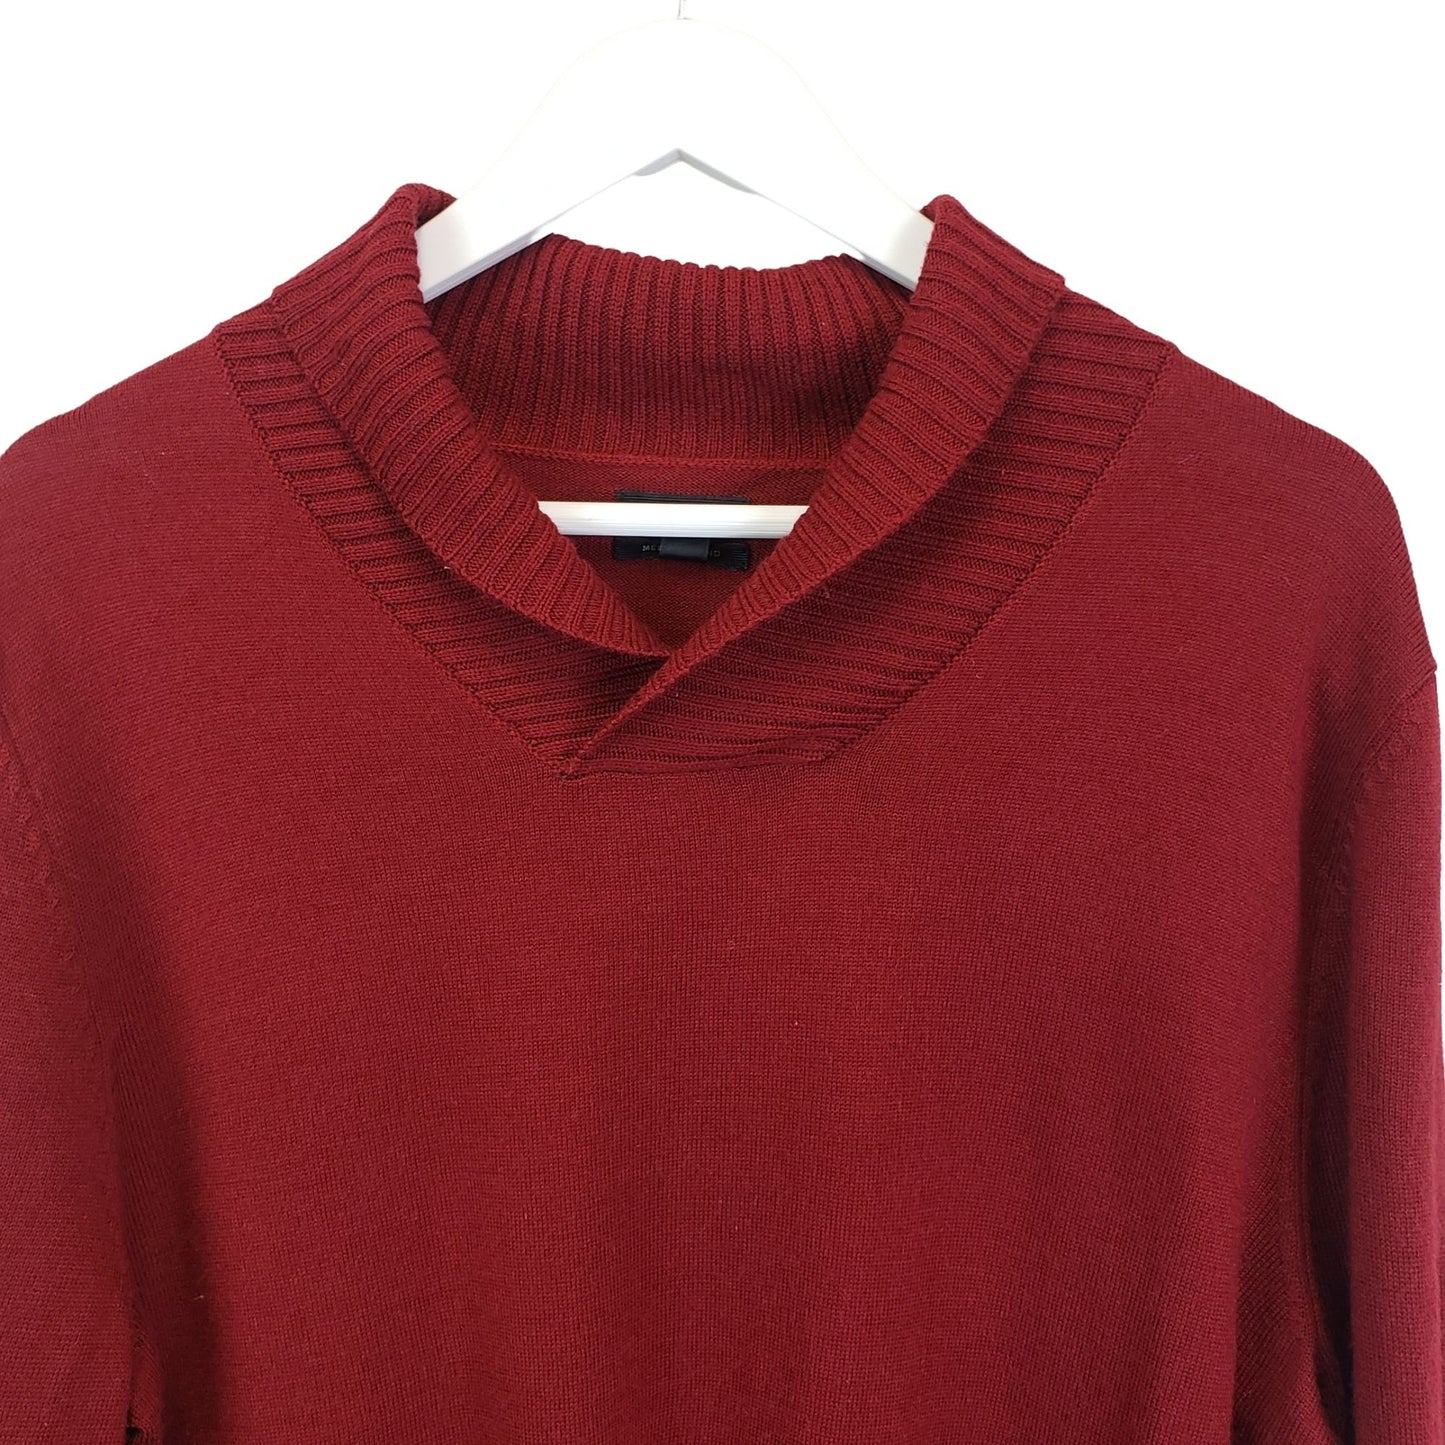 Apt. 9 Size Medium Merino Wool Blend Sweater in Maroon